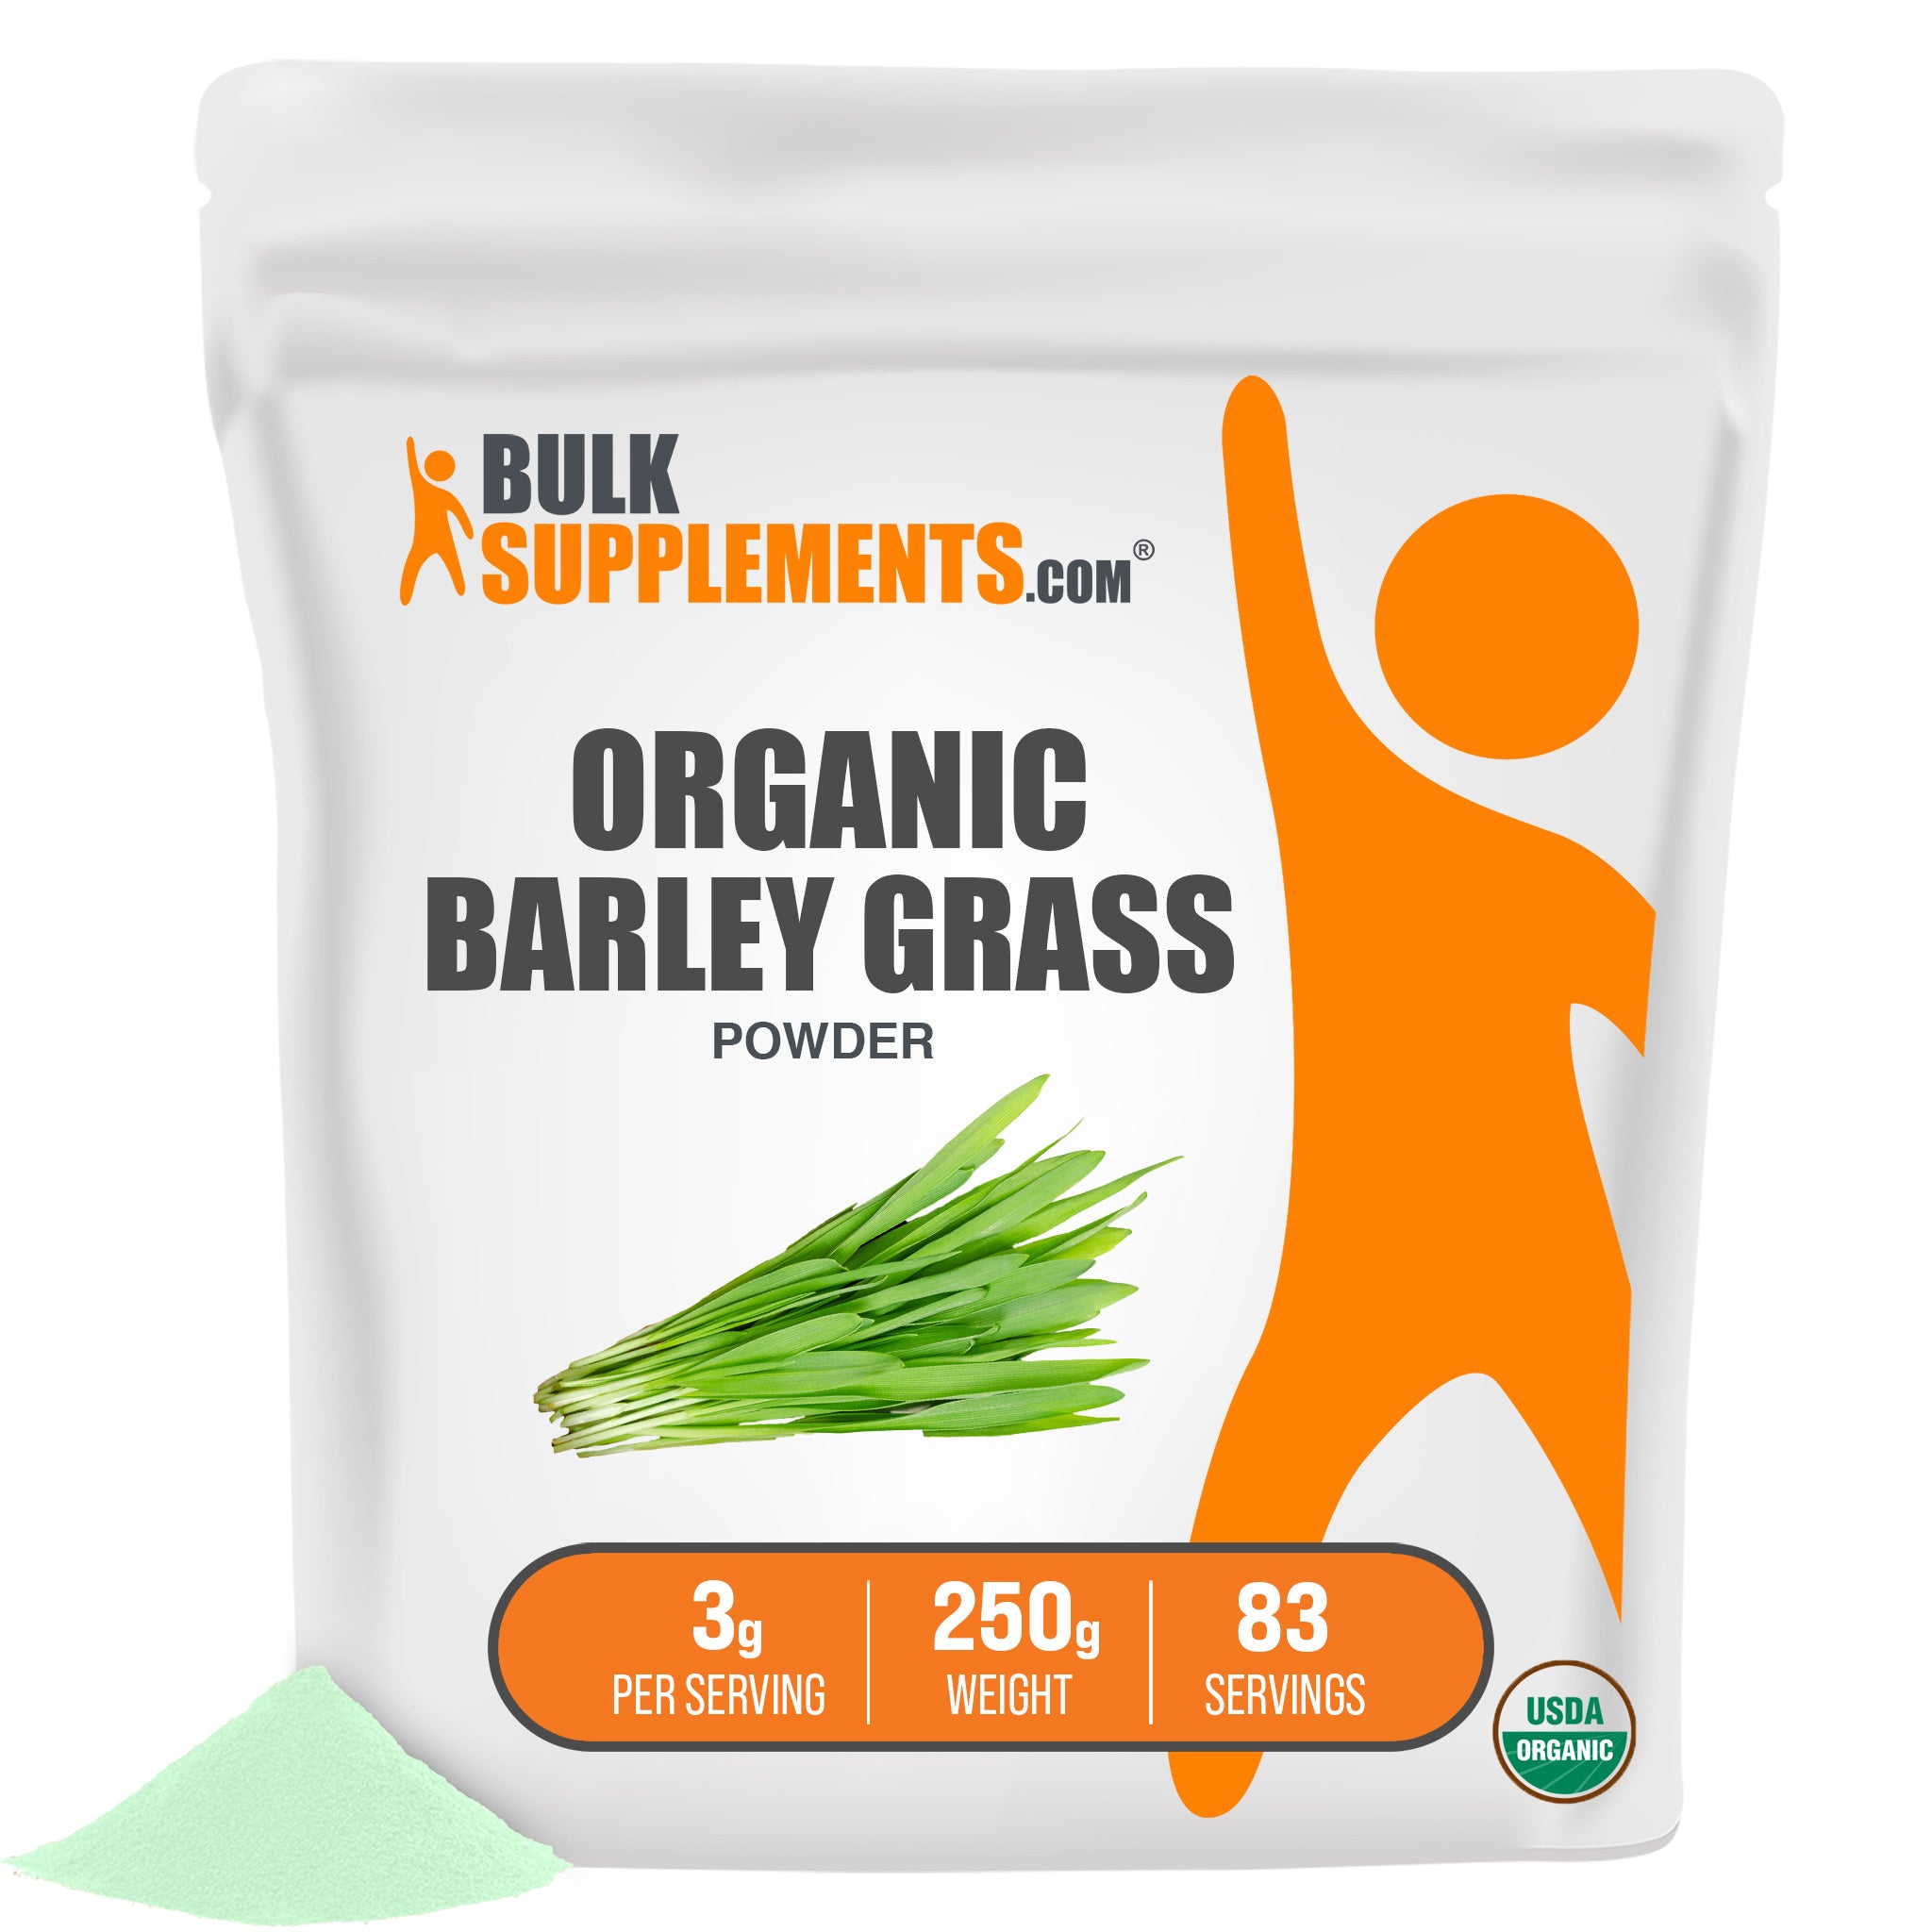 Organic Barley Grass Powder 250g bag